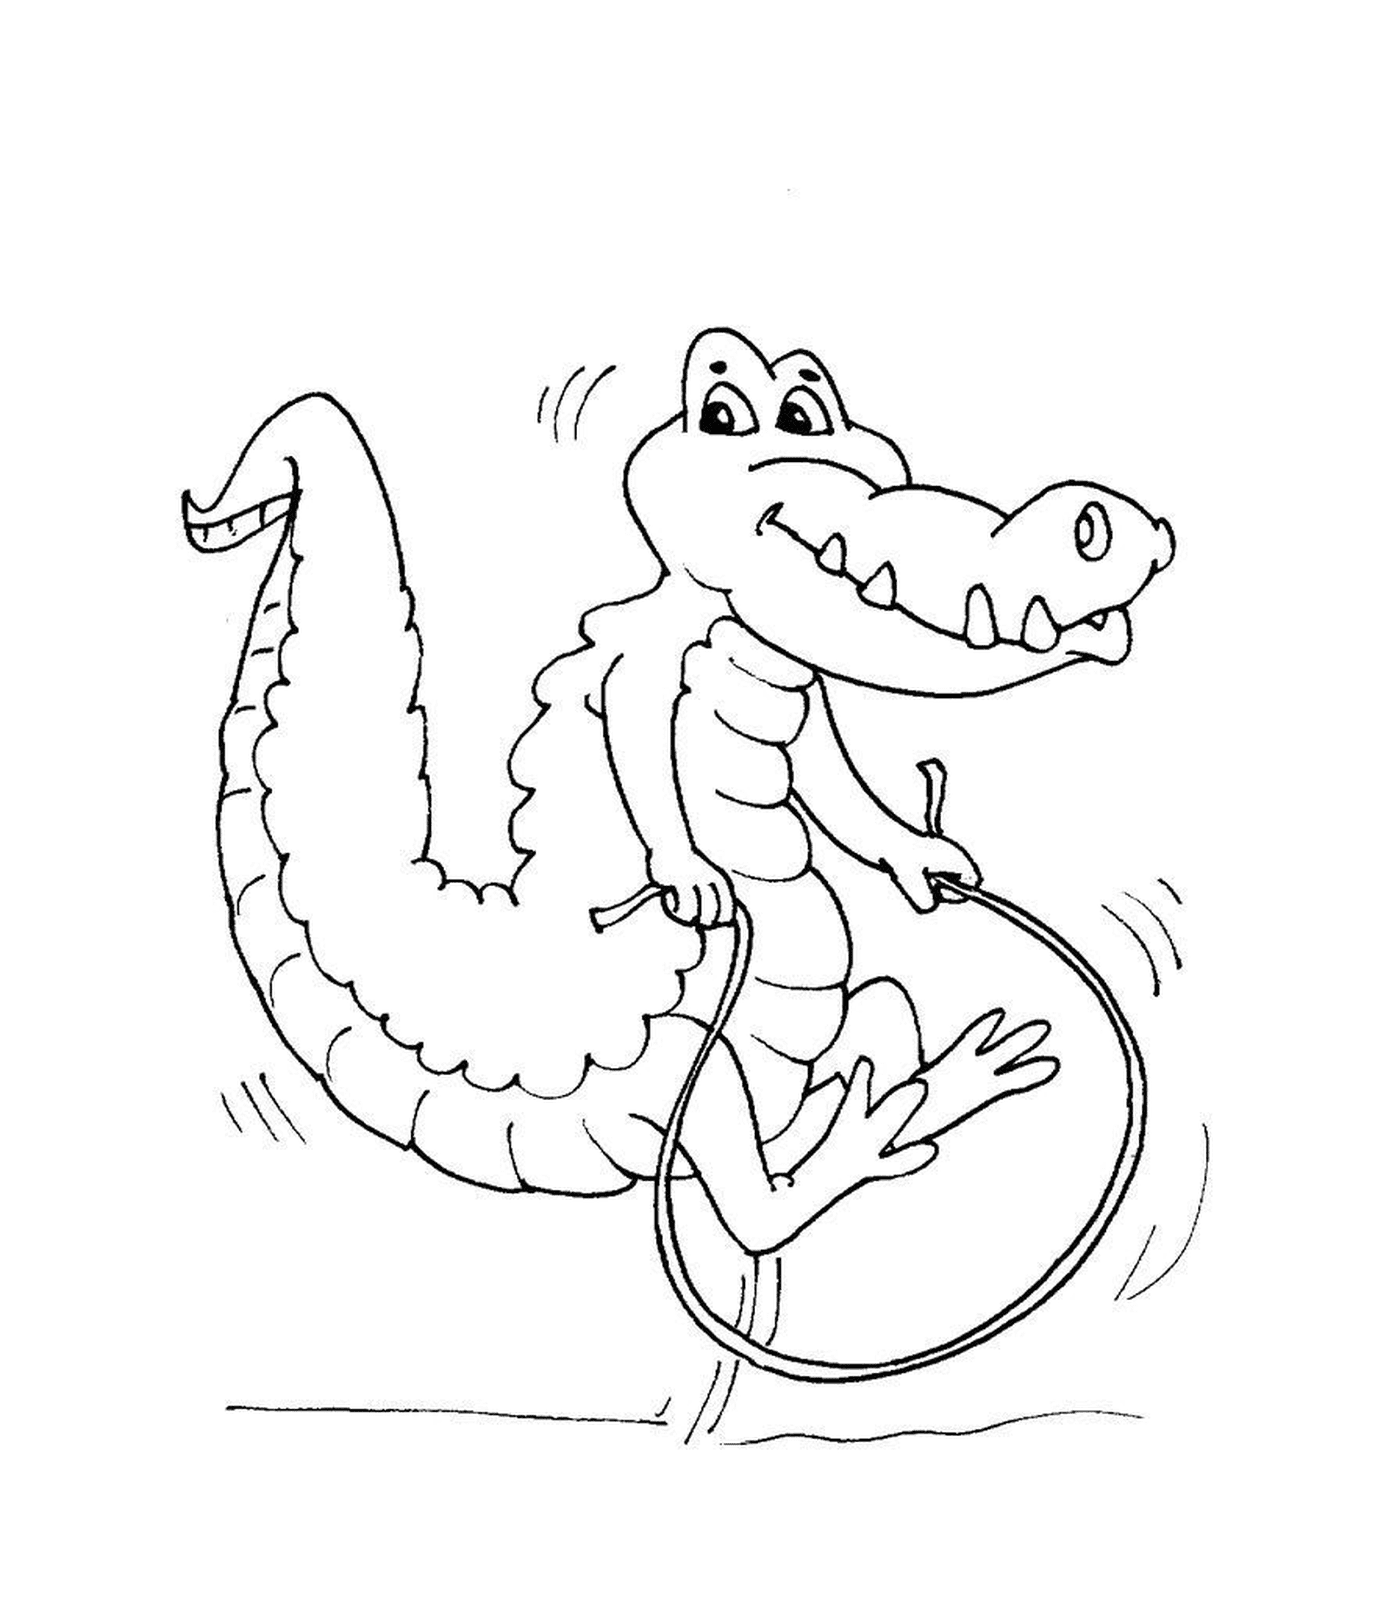  A crocodile jumping rope 